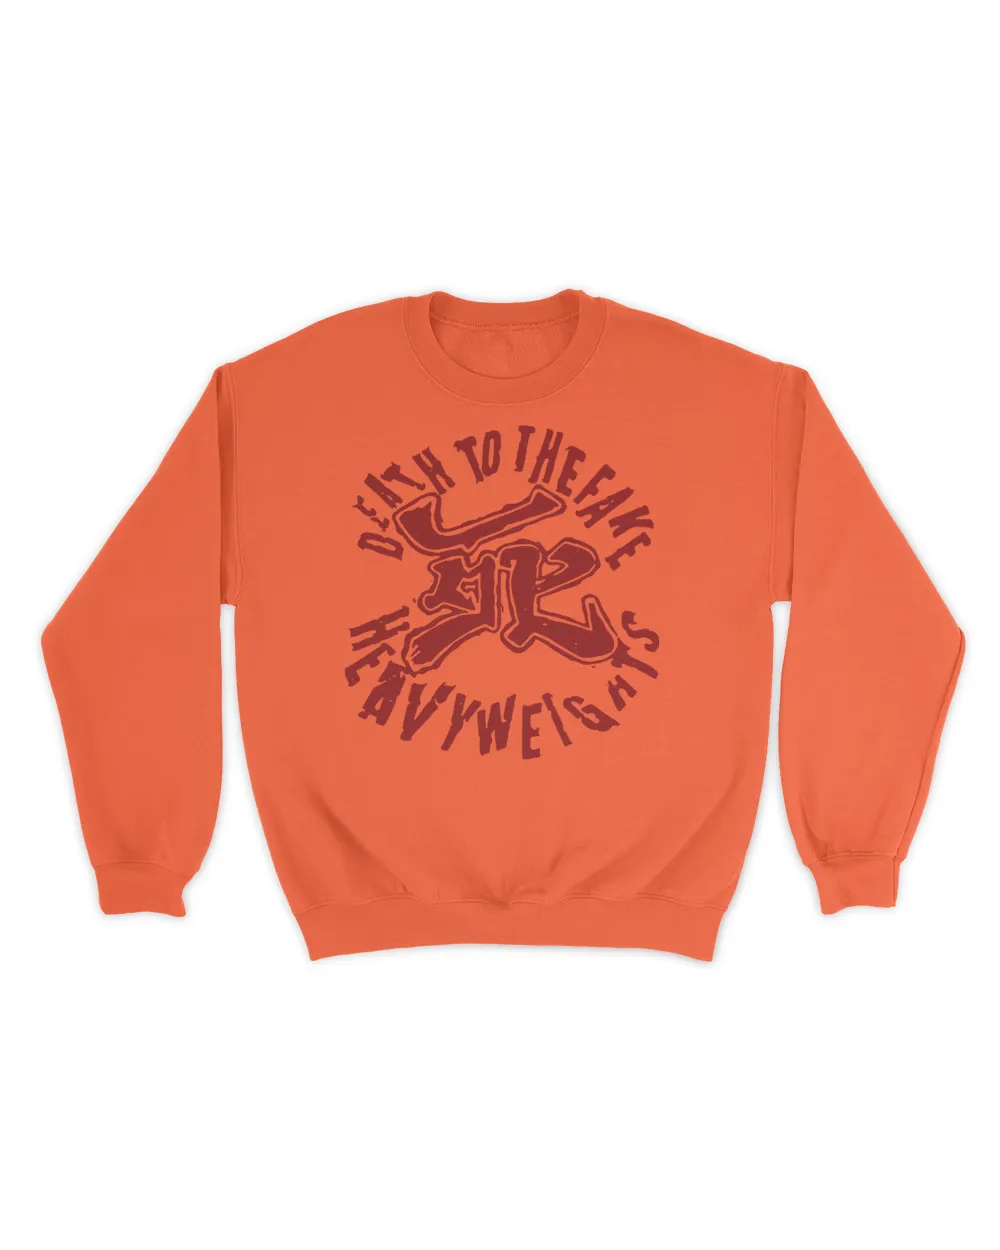 Official Death to fake heavyweights T-shirt Unisex Sweatshirt orange 